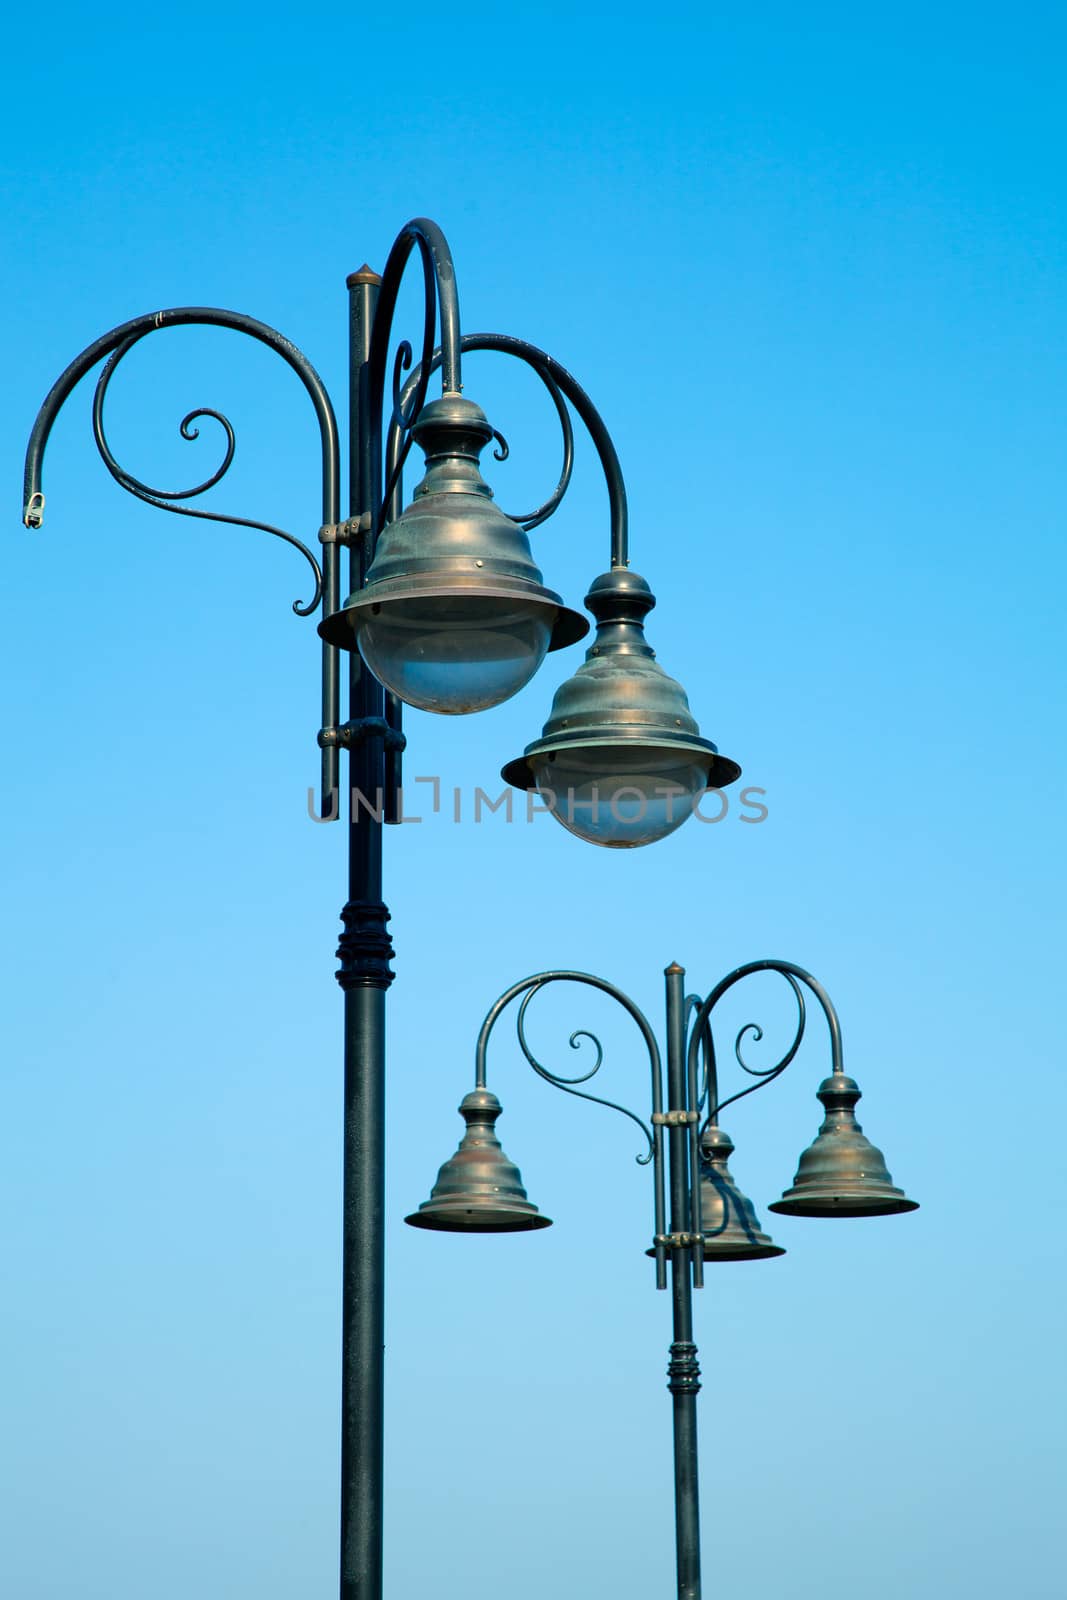 old street-lamp on blue sky